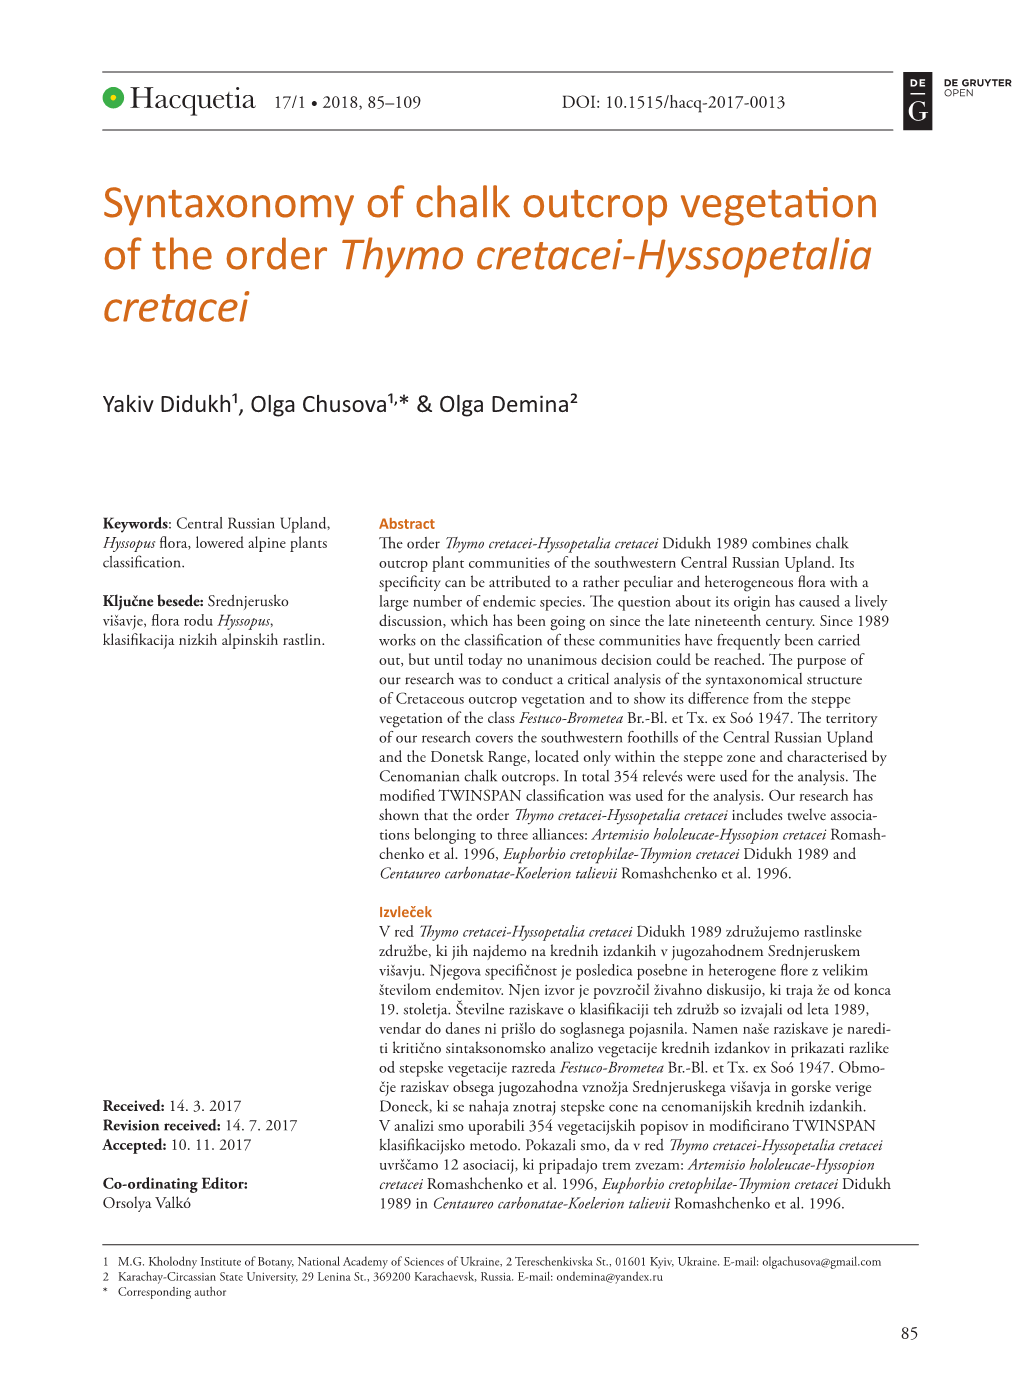 Syntaxonomy of Chalk Outcrop Vegetation of the Order Thymo Cretacei-Hyssopetalia Cretacei